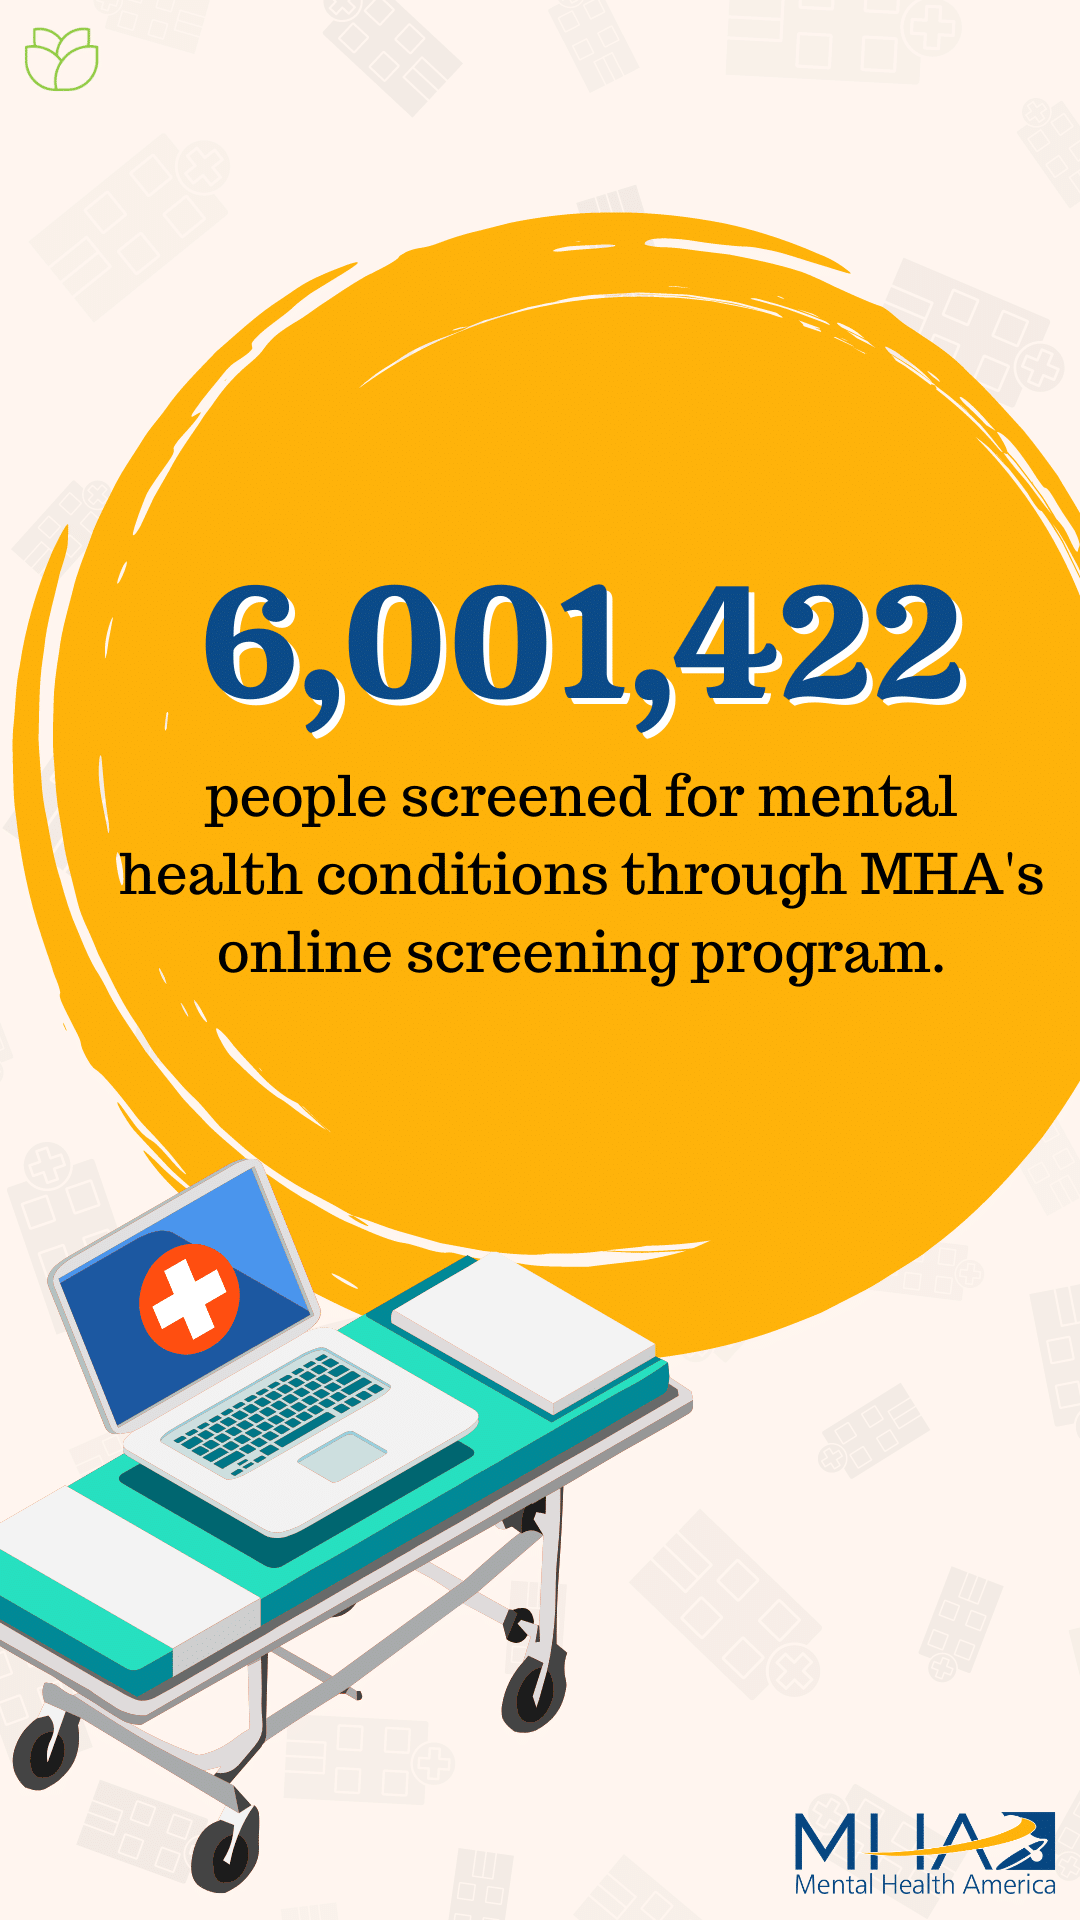 Mental Health America's Screening Program